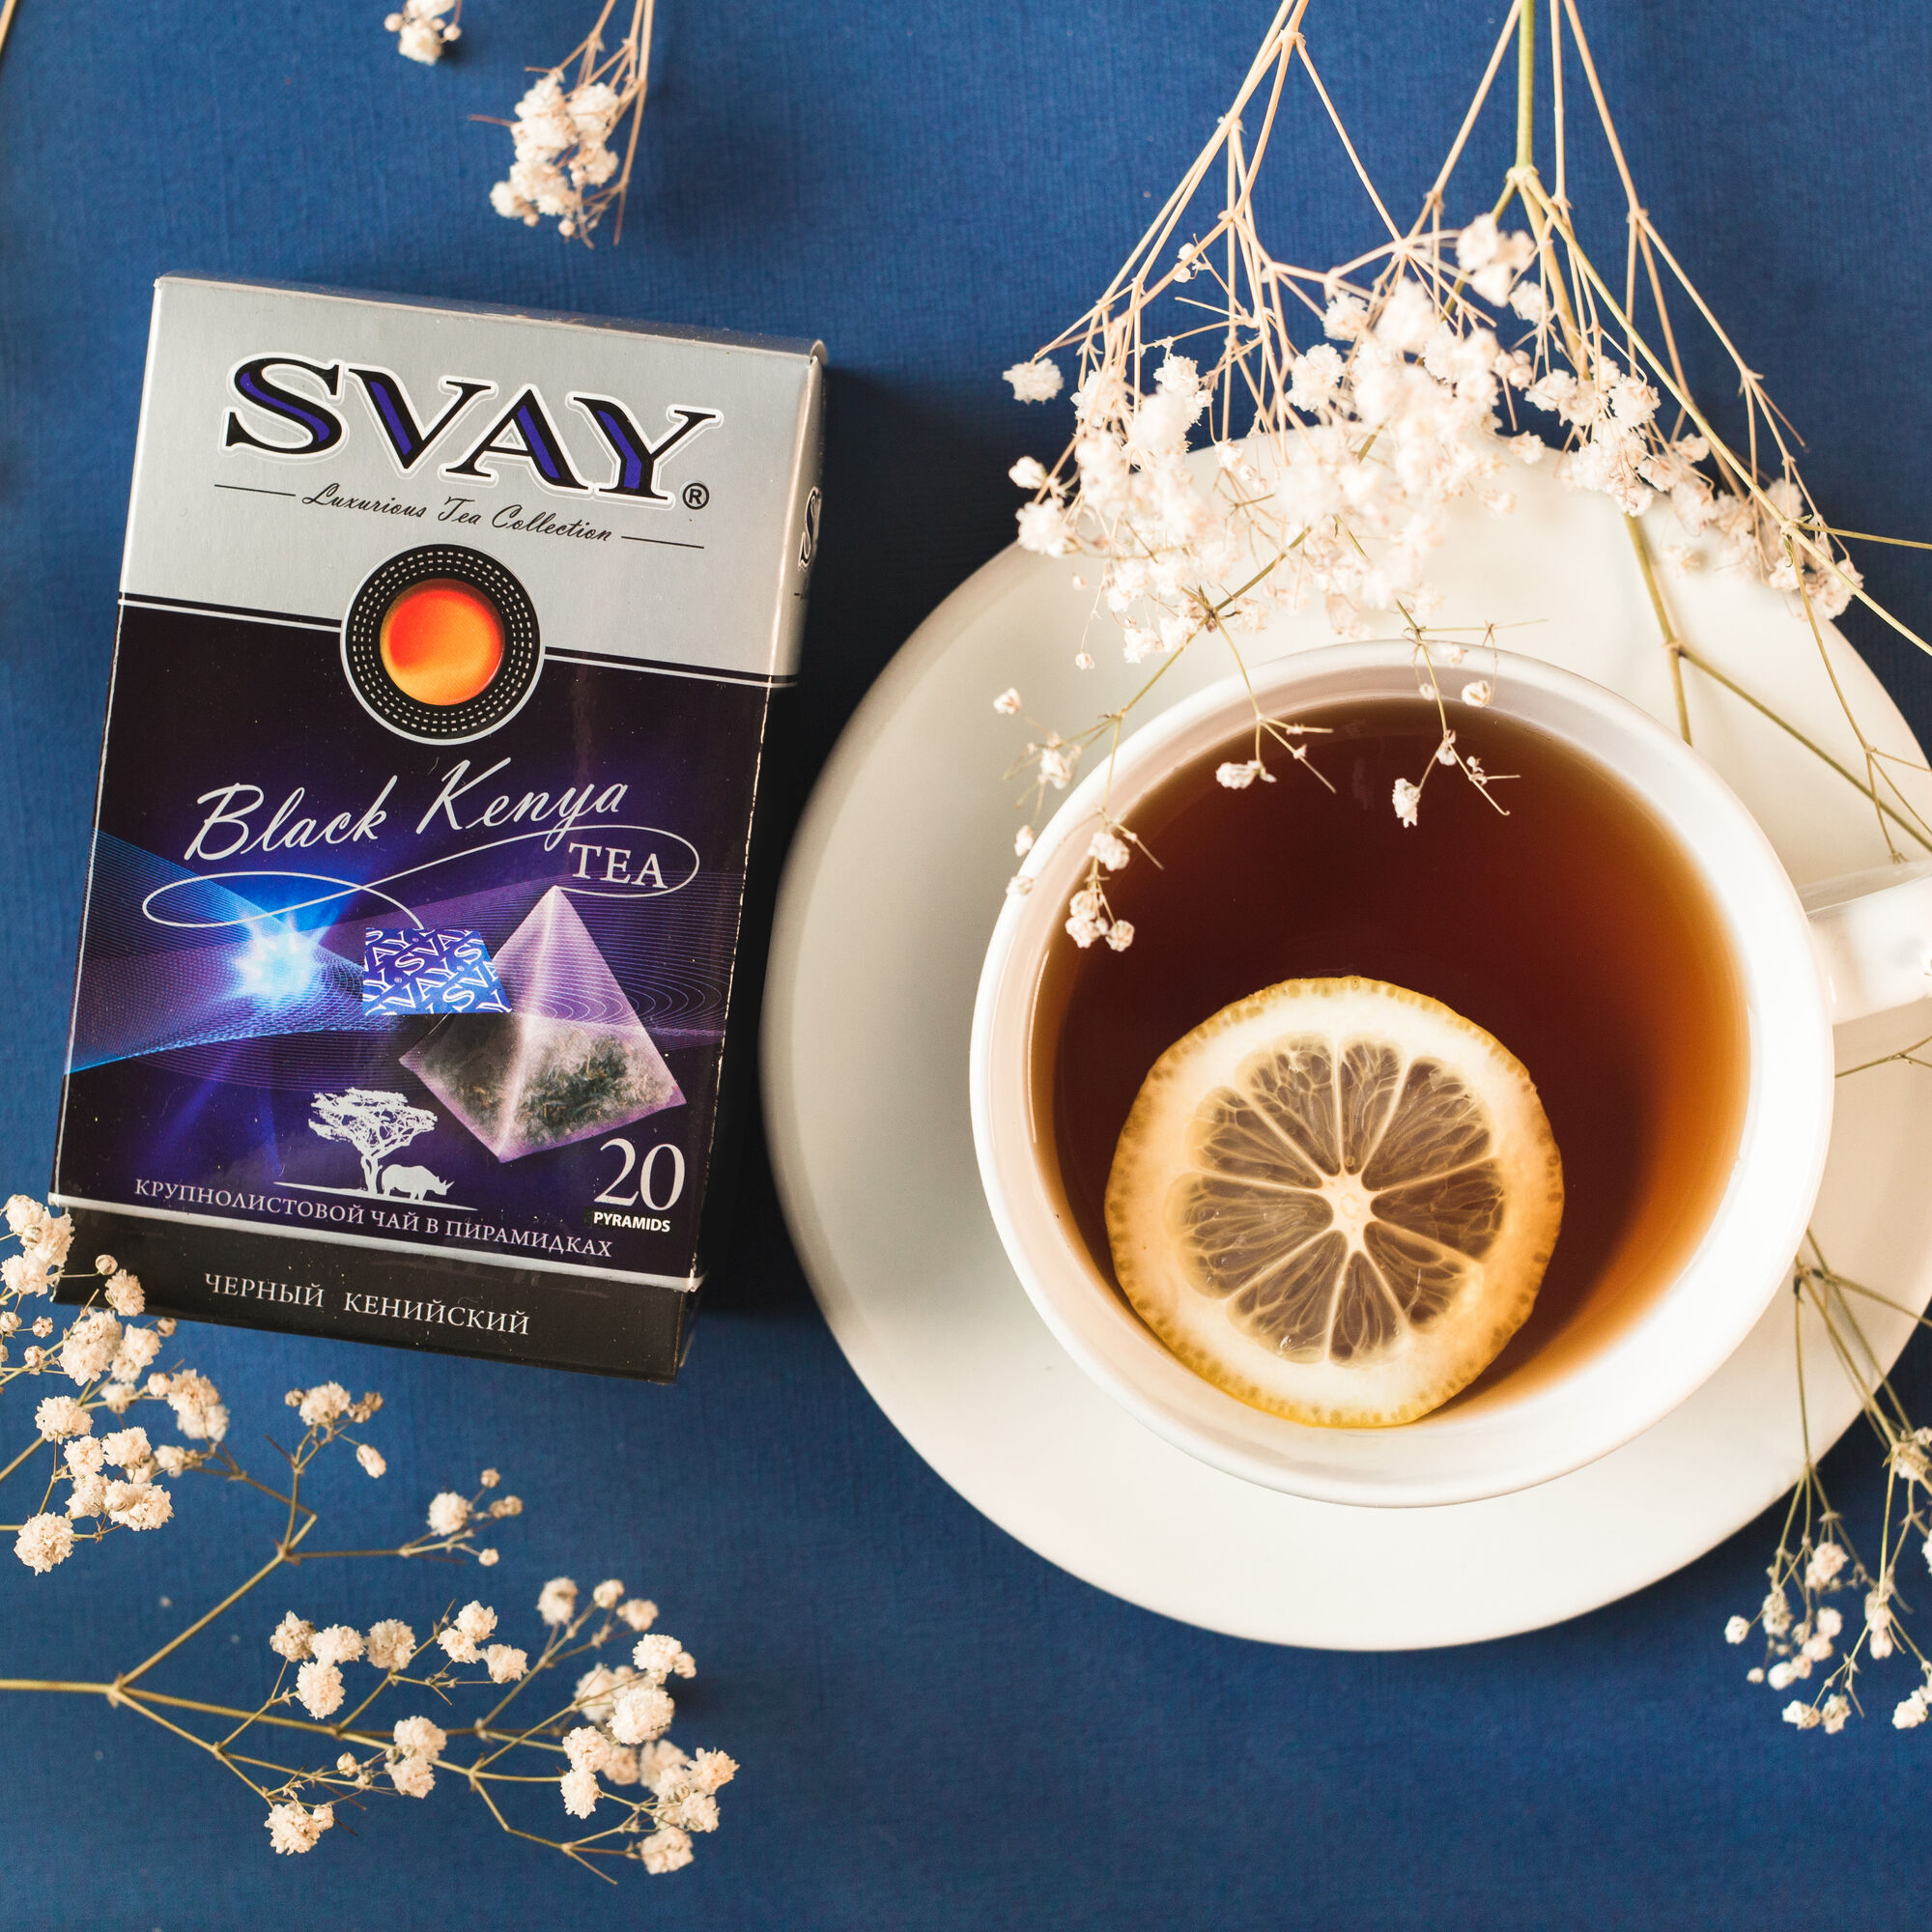 Чай СВ-Svay Black Kenya черный 20х2.5 пирамидки (в коробке 12 шт)